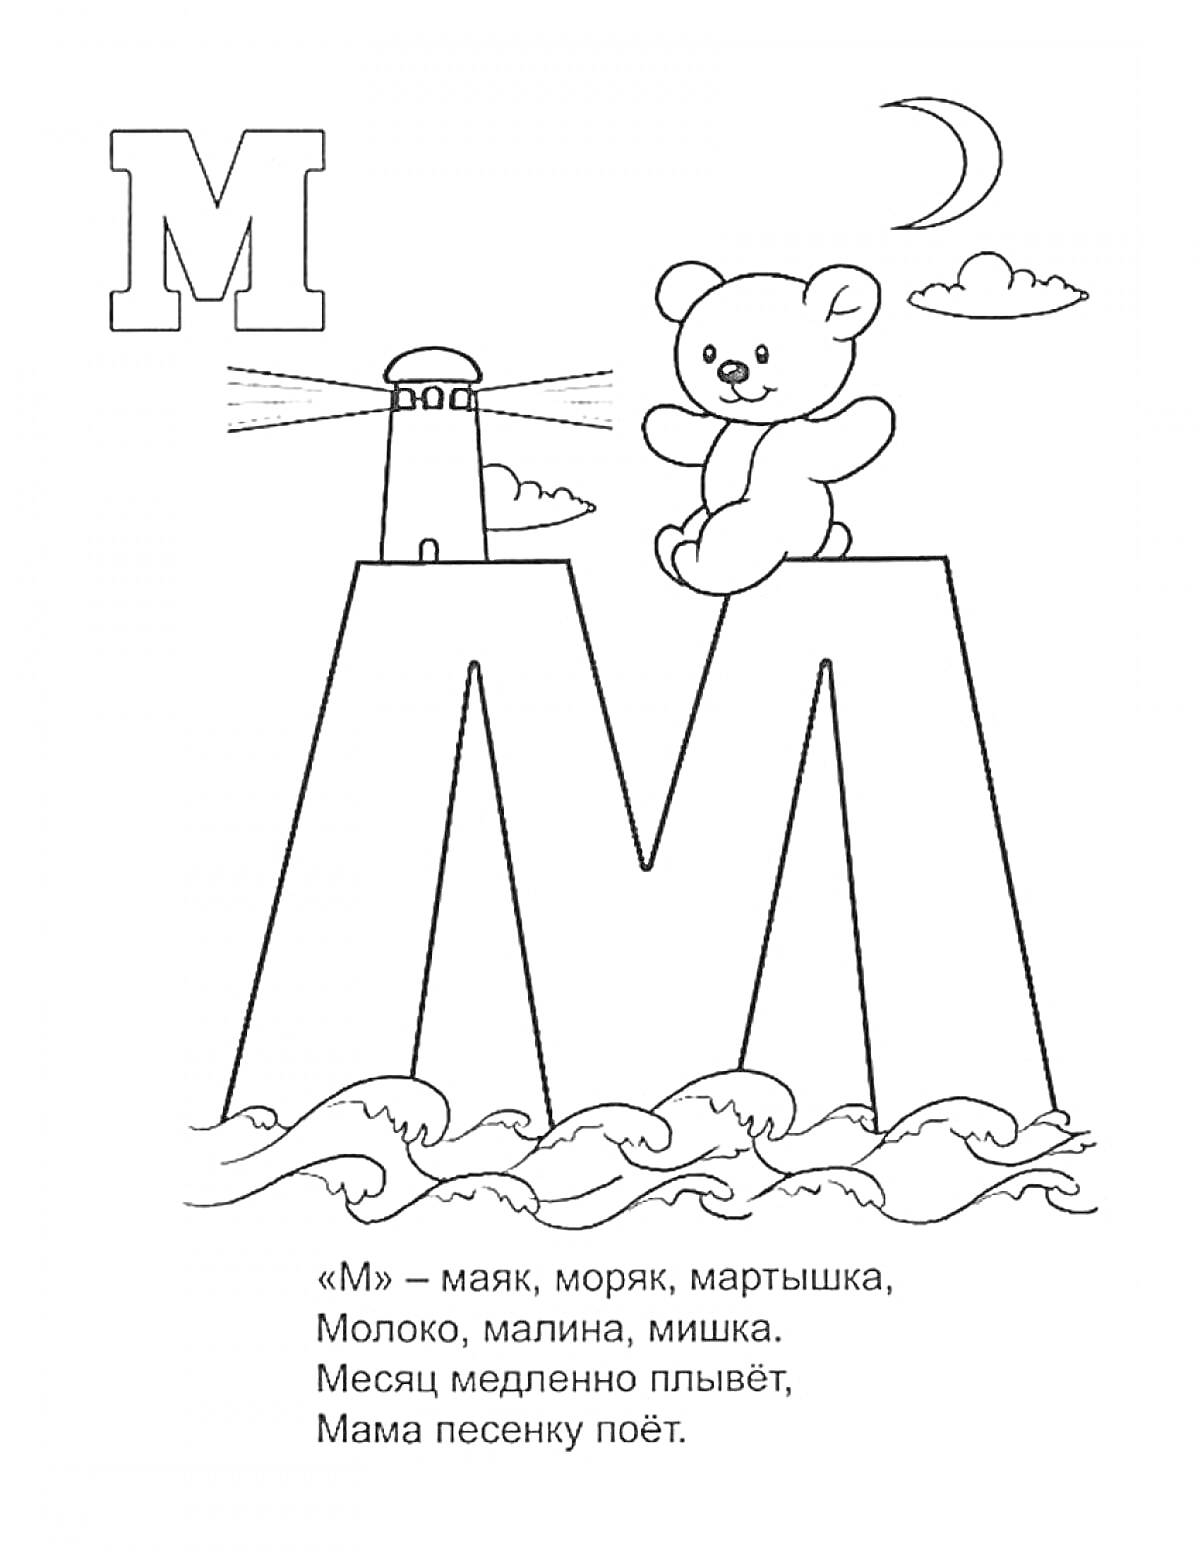 На раскраске изображено: Буква М, Маяк, Медведь, Волны, Луна, Алфавит, Облака